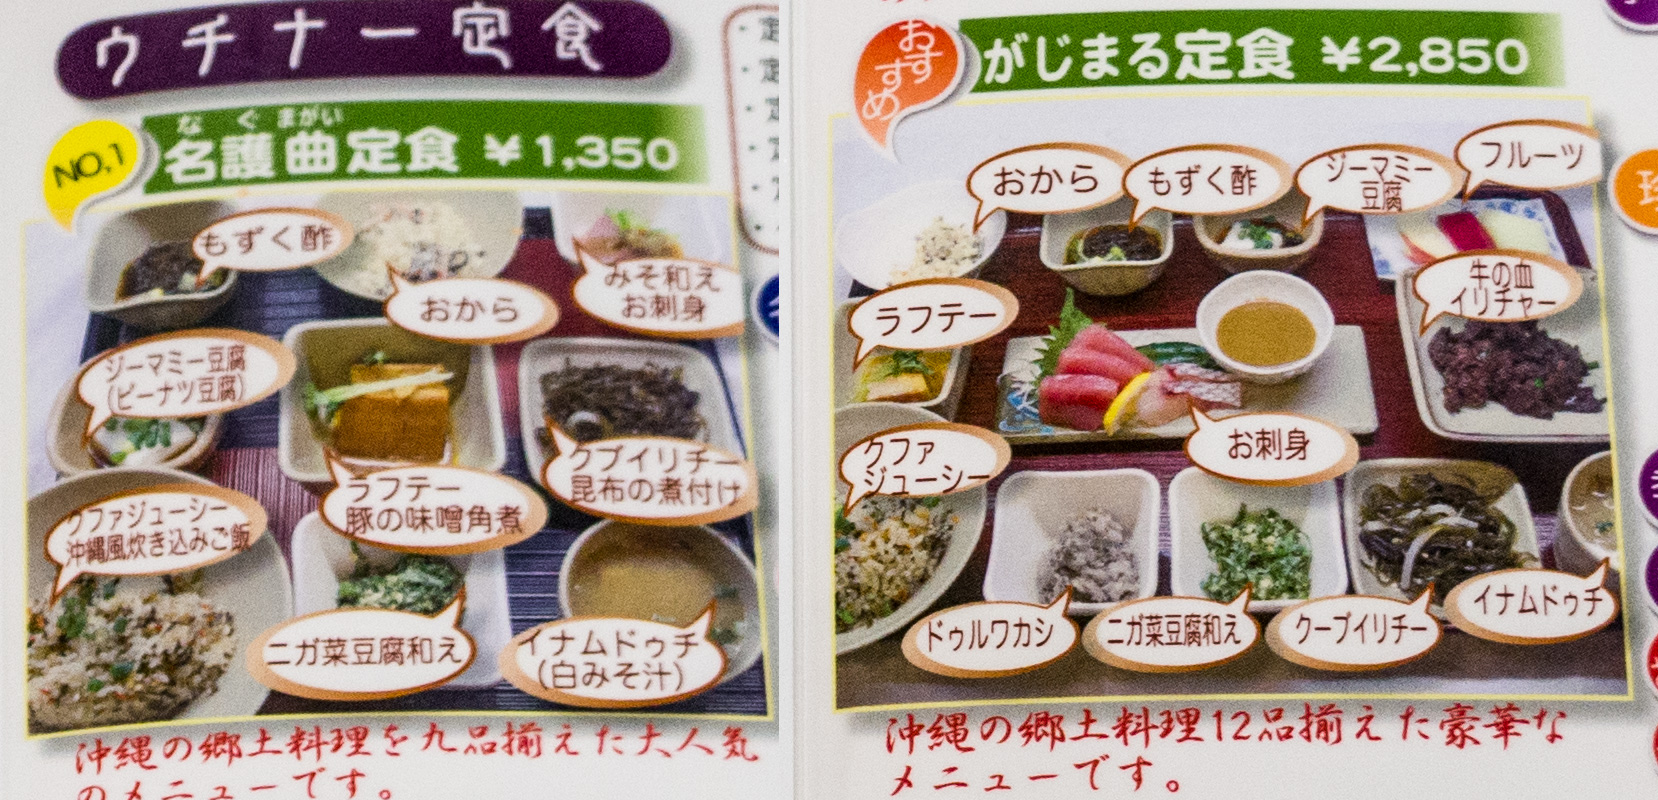 menu_uchina_gajumaru_nagumagai.jpg